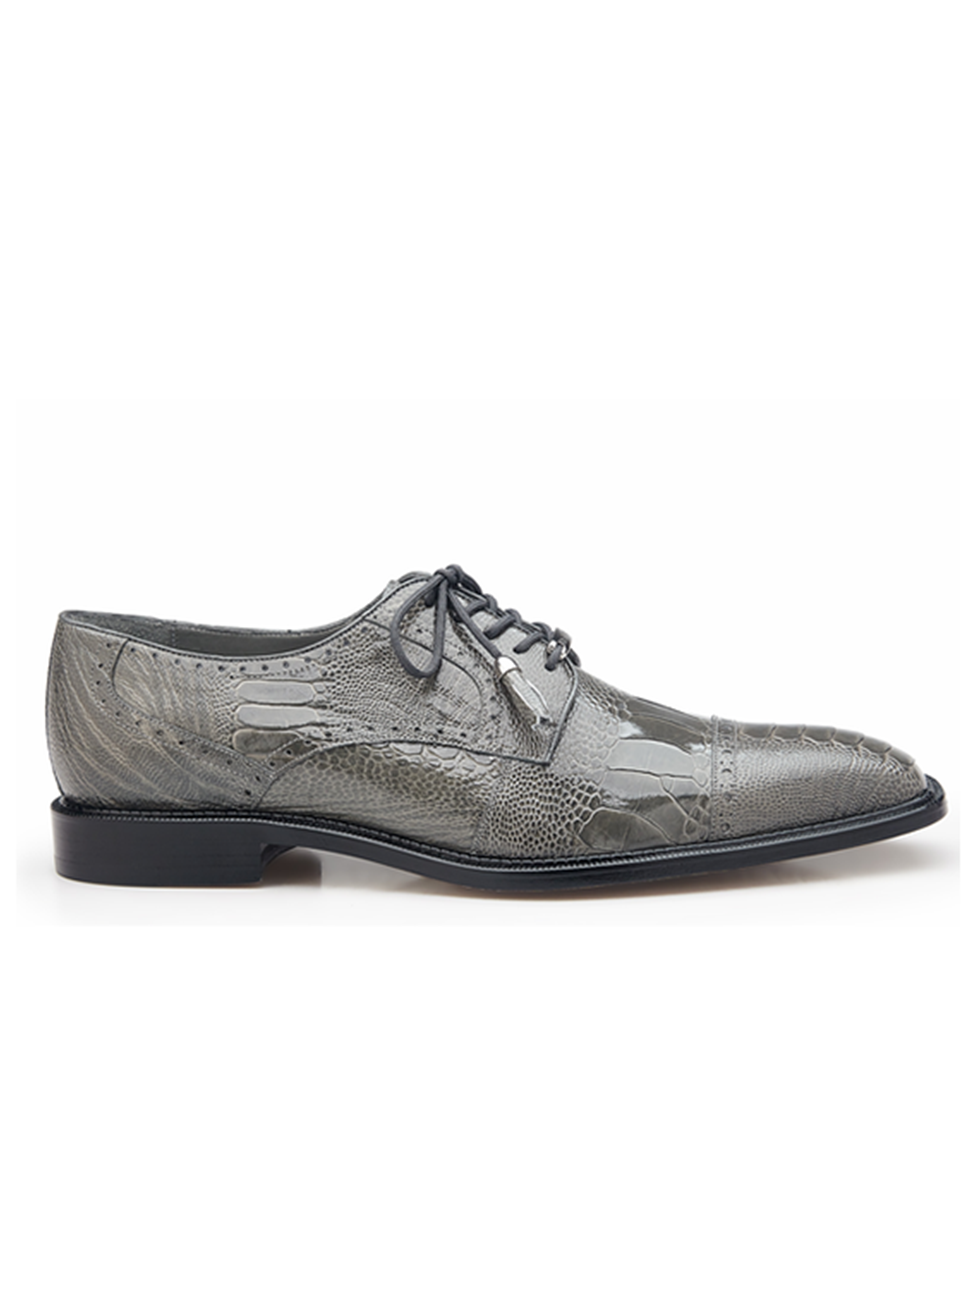 Gray Batta Ostrich Cap-Toed Derby Dress Shoe | Belvedere Shoes ...